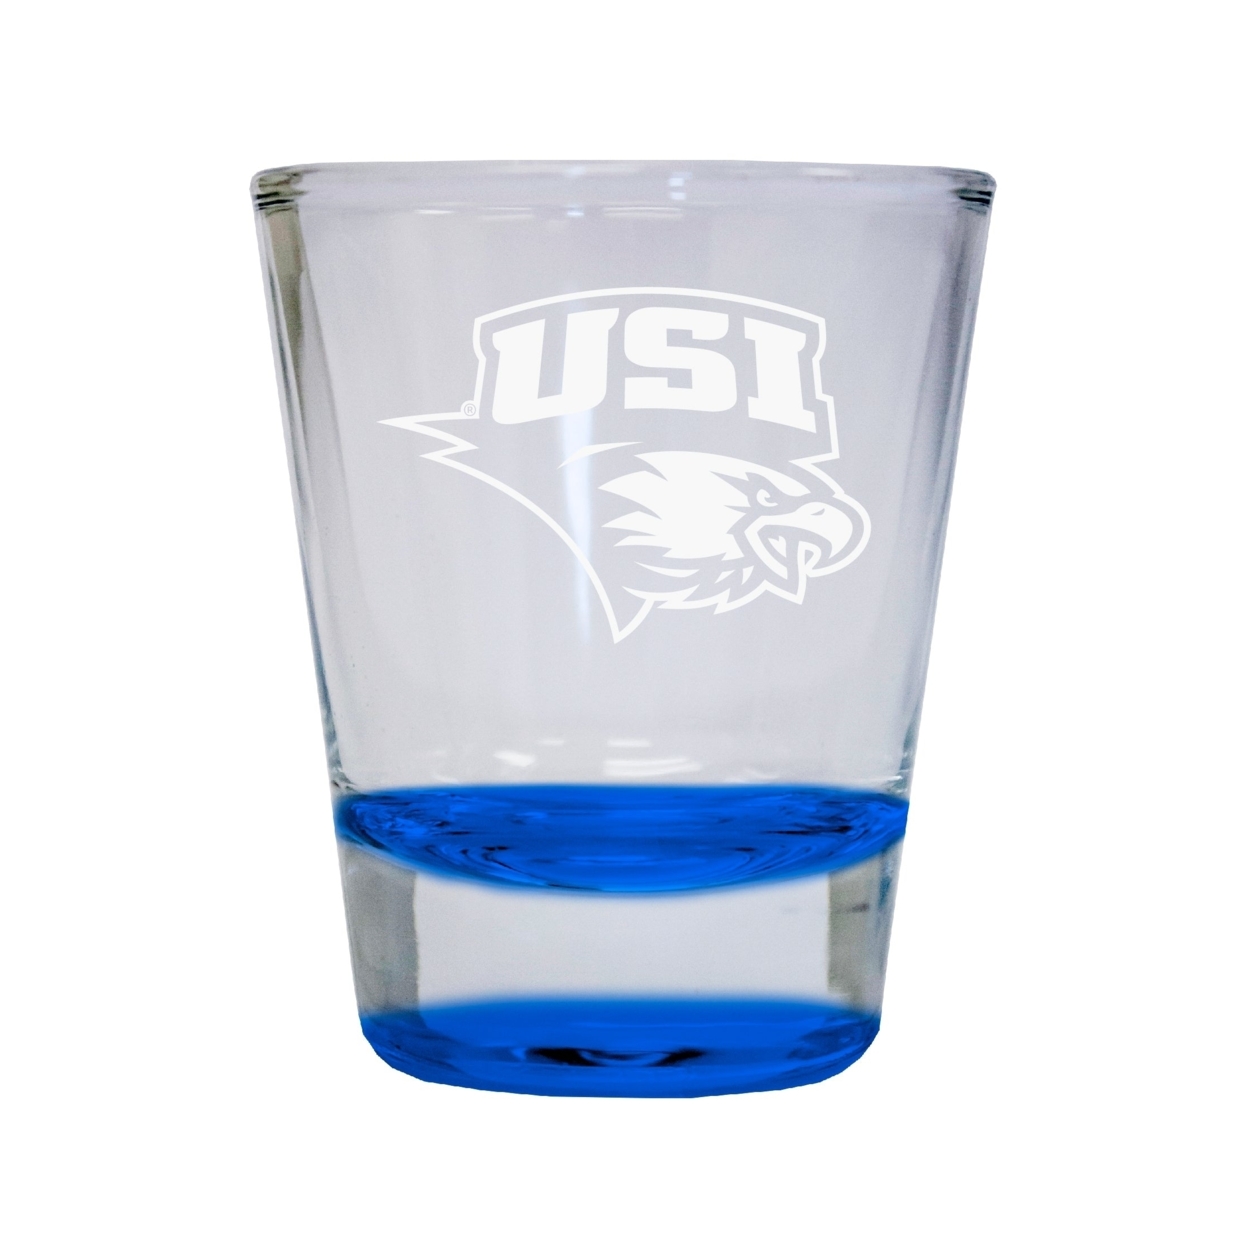 University Of Southern Indiana Etched Round Shot Glass 2 Oz Blue